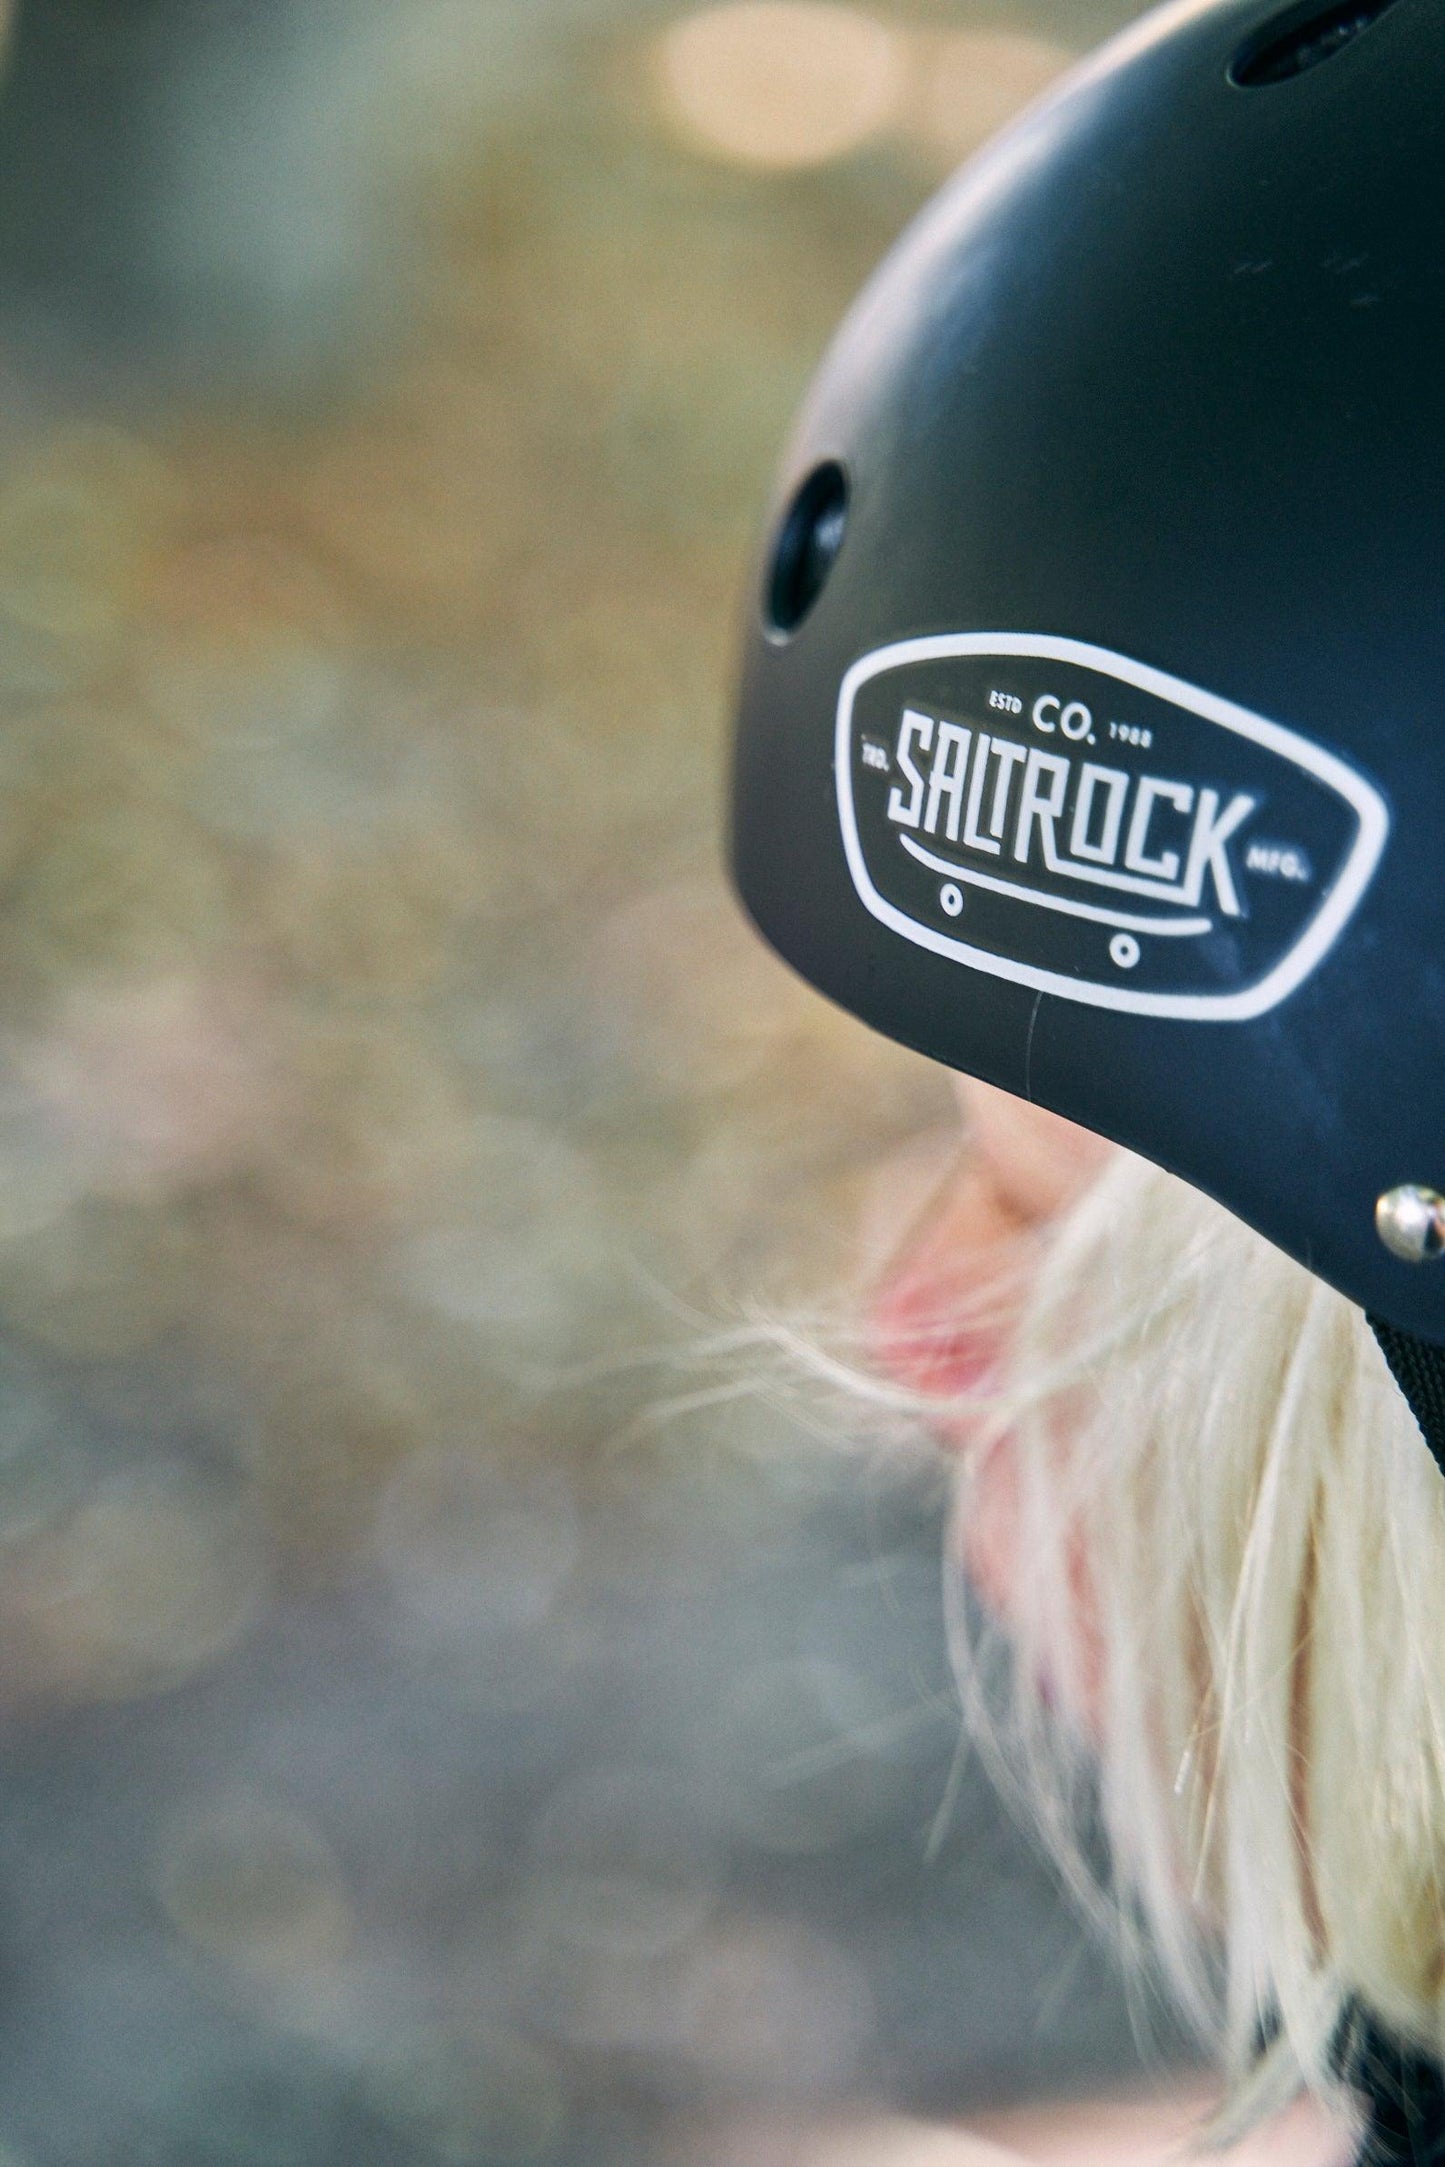 Hardskate - Skate/Scooter Helmet - Saltrock